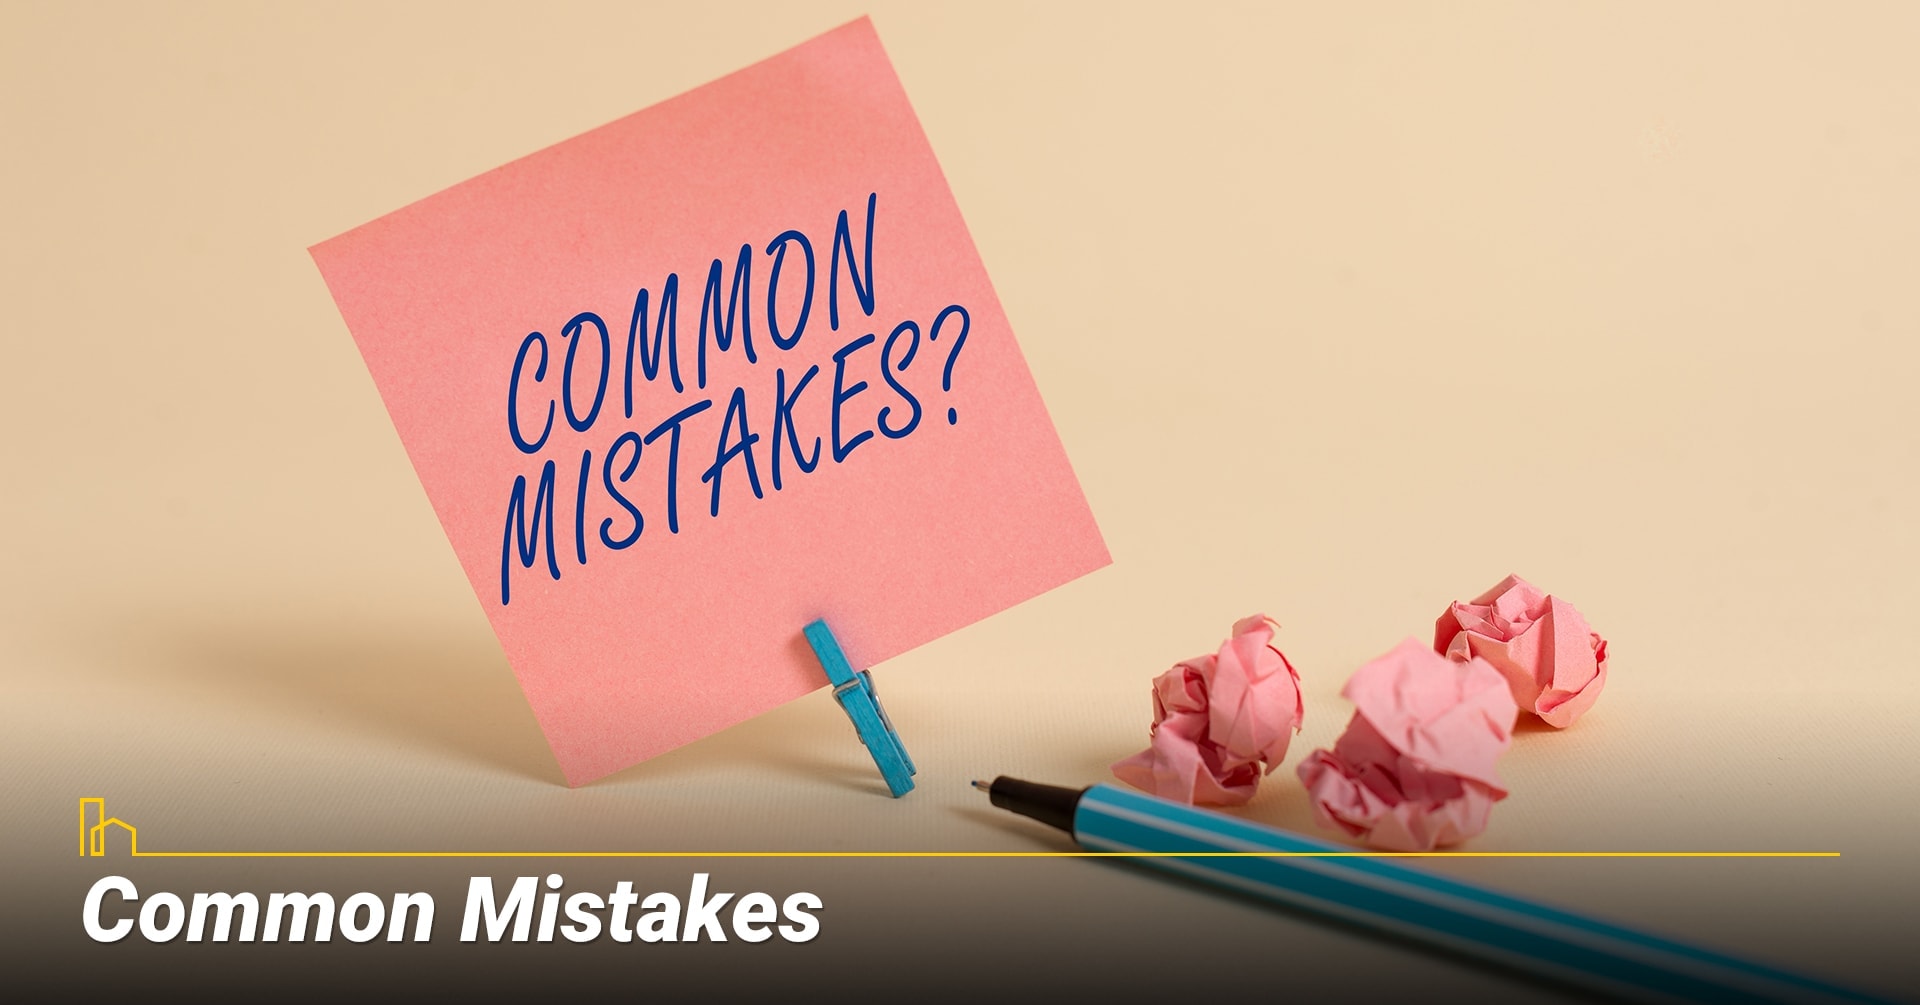 Common Mistakes, avoid common mistakes